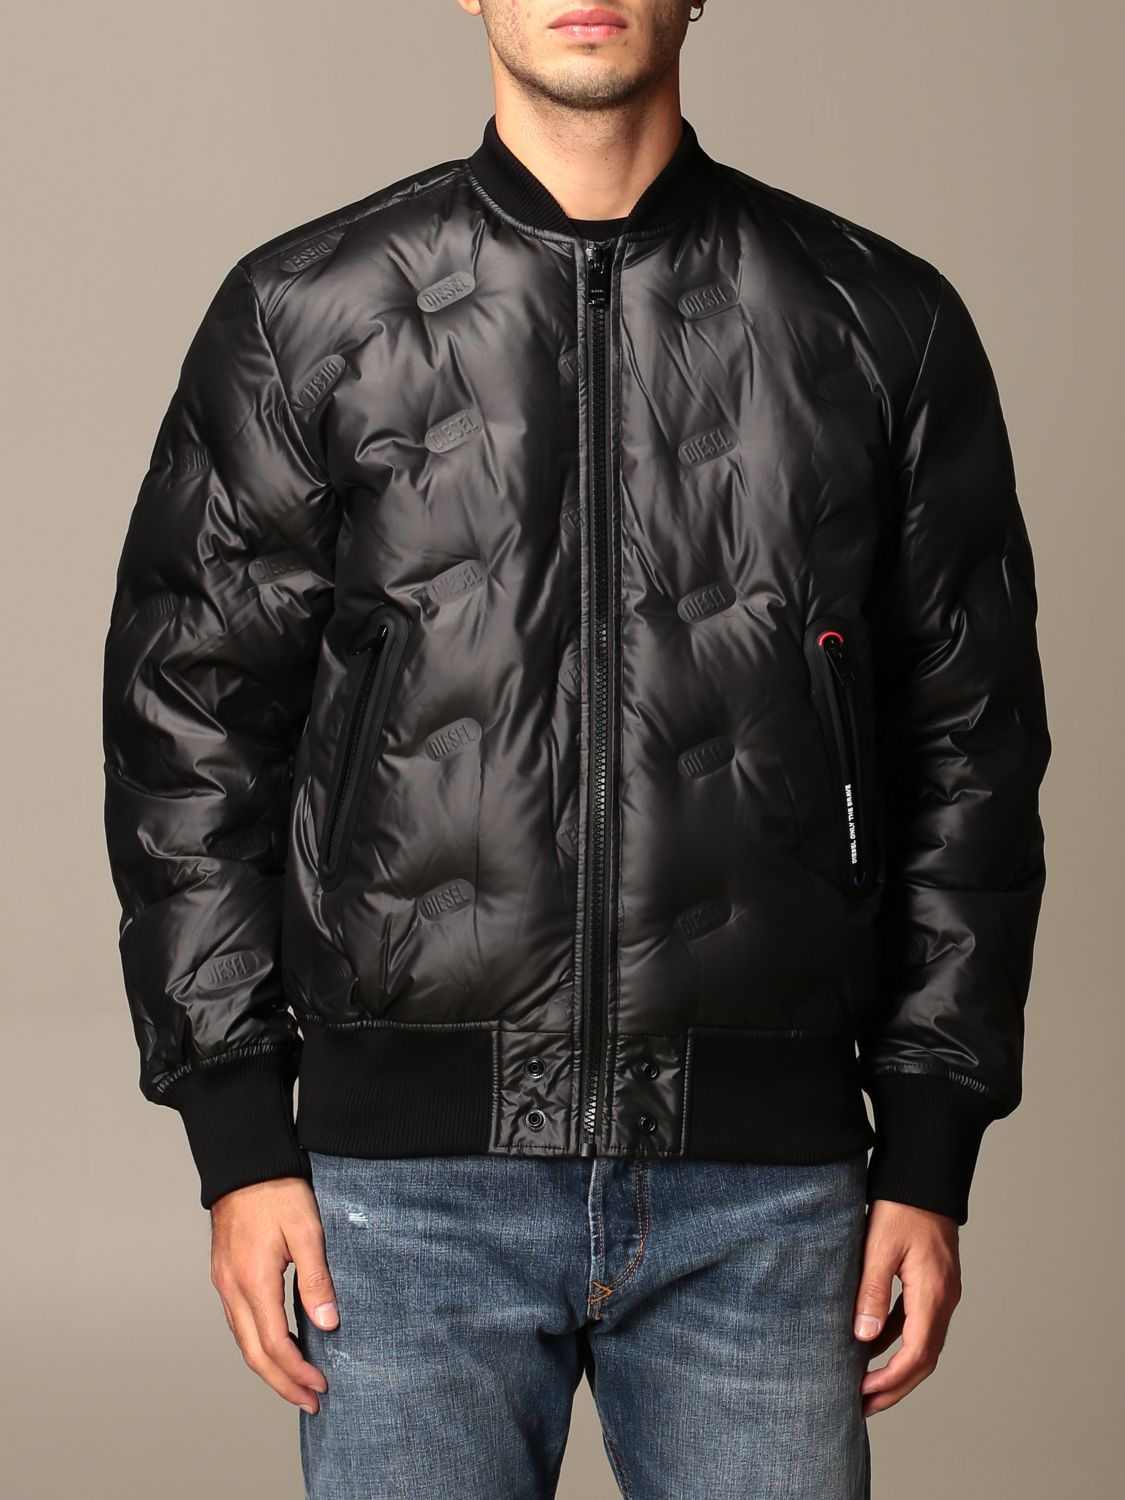 techo Economía Aproximación DIESEL: bomber jacket in quilted nylon - Black | Diesel jacket A01152 0LAZX  online on GIGLIO.COM